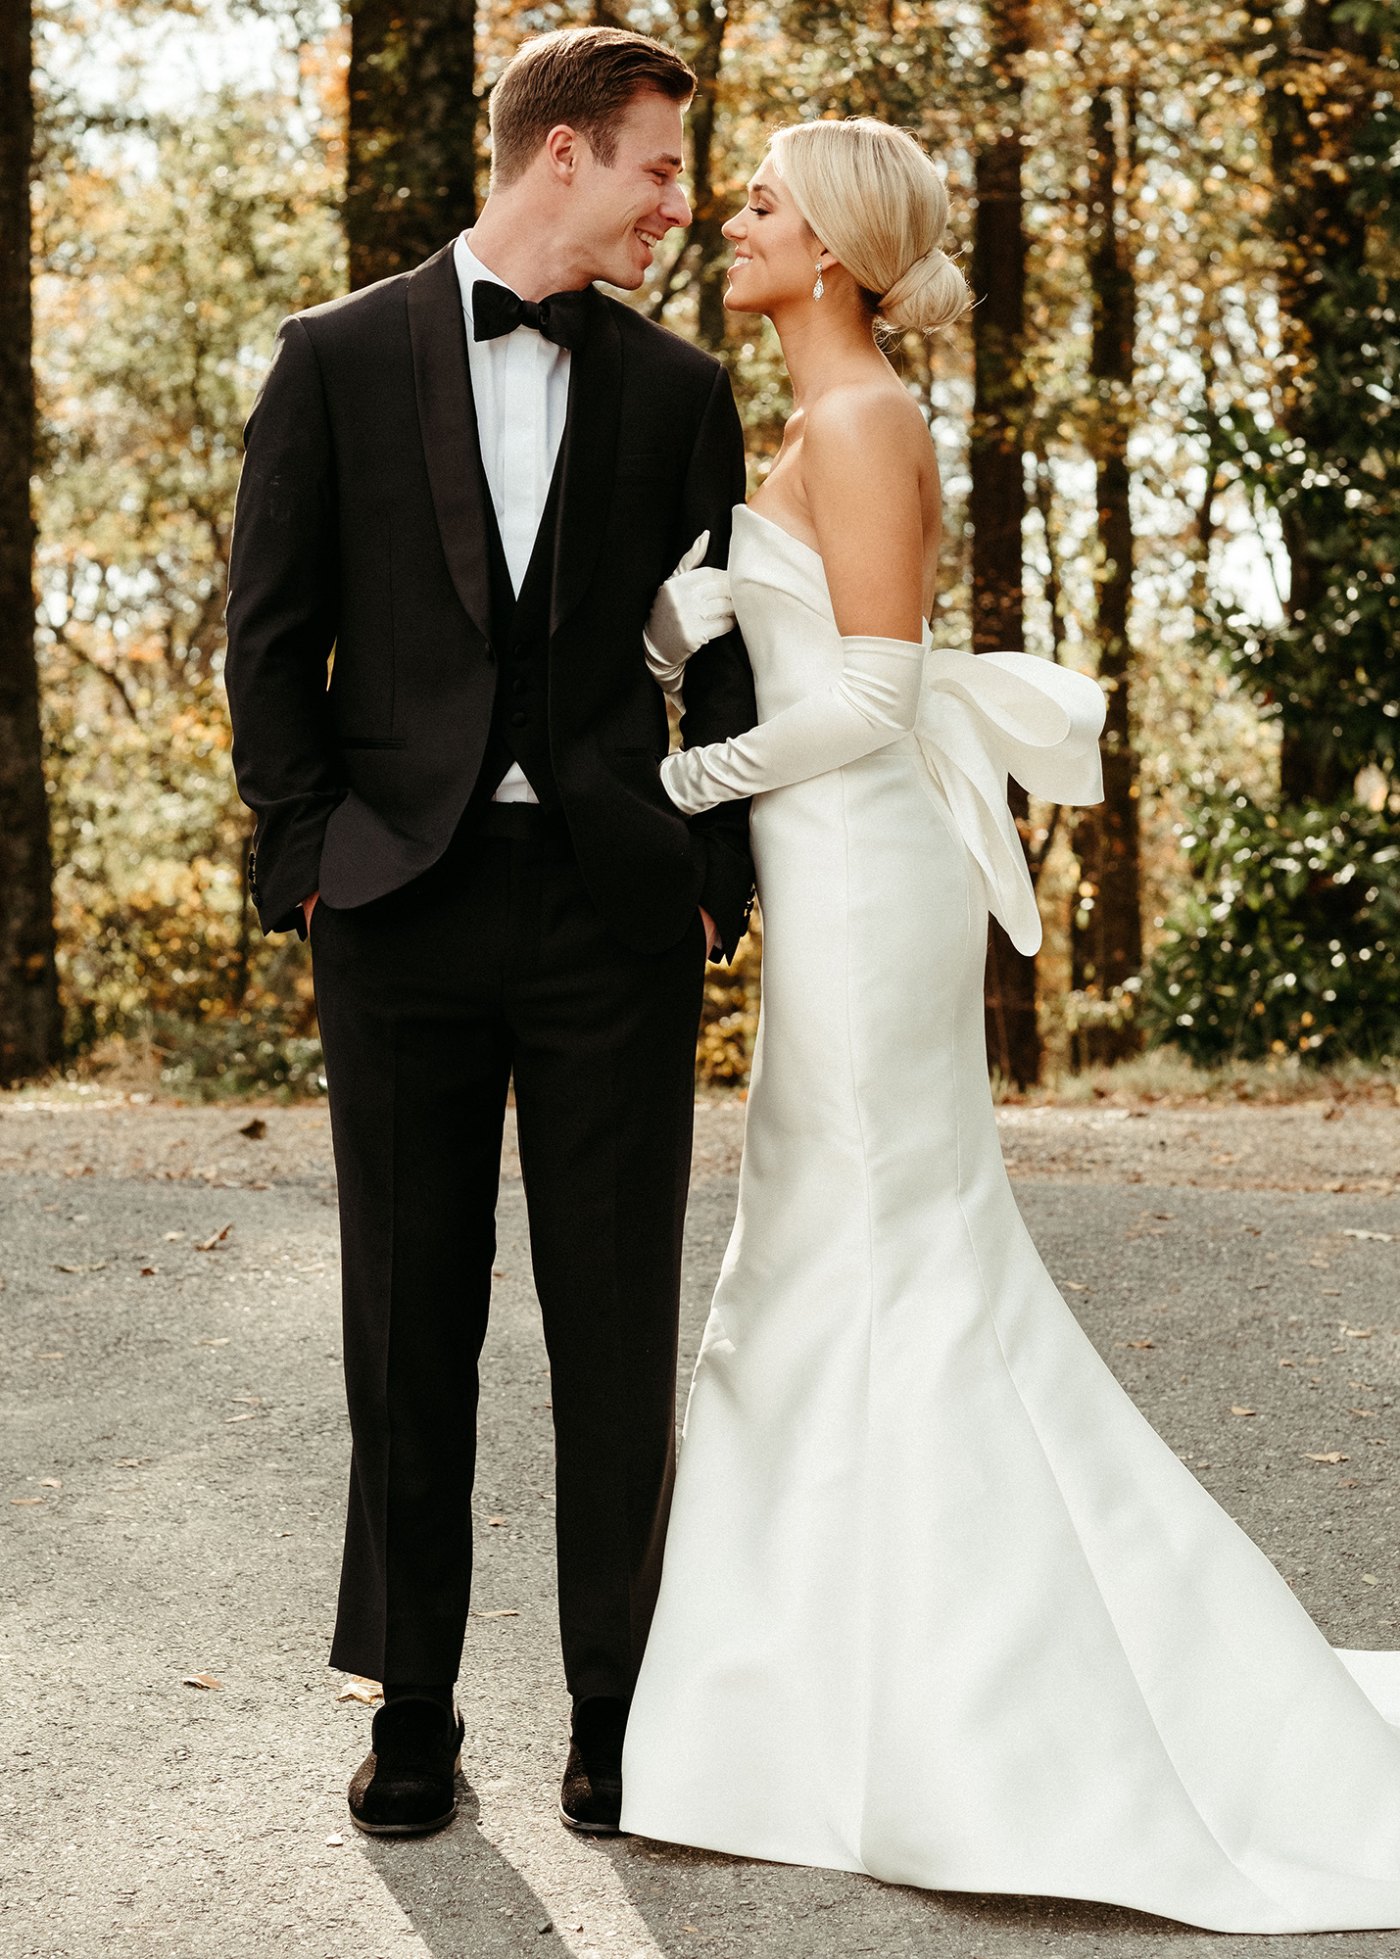 Sadie Robertson And Husband Christian Huff Share First Wedding Photos 